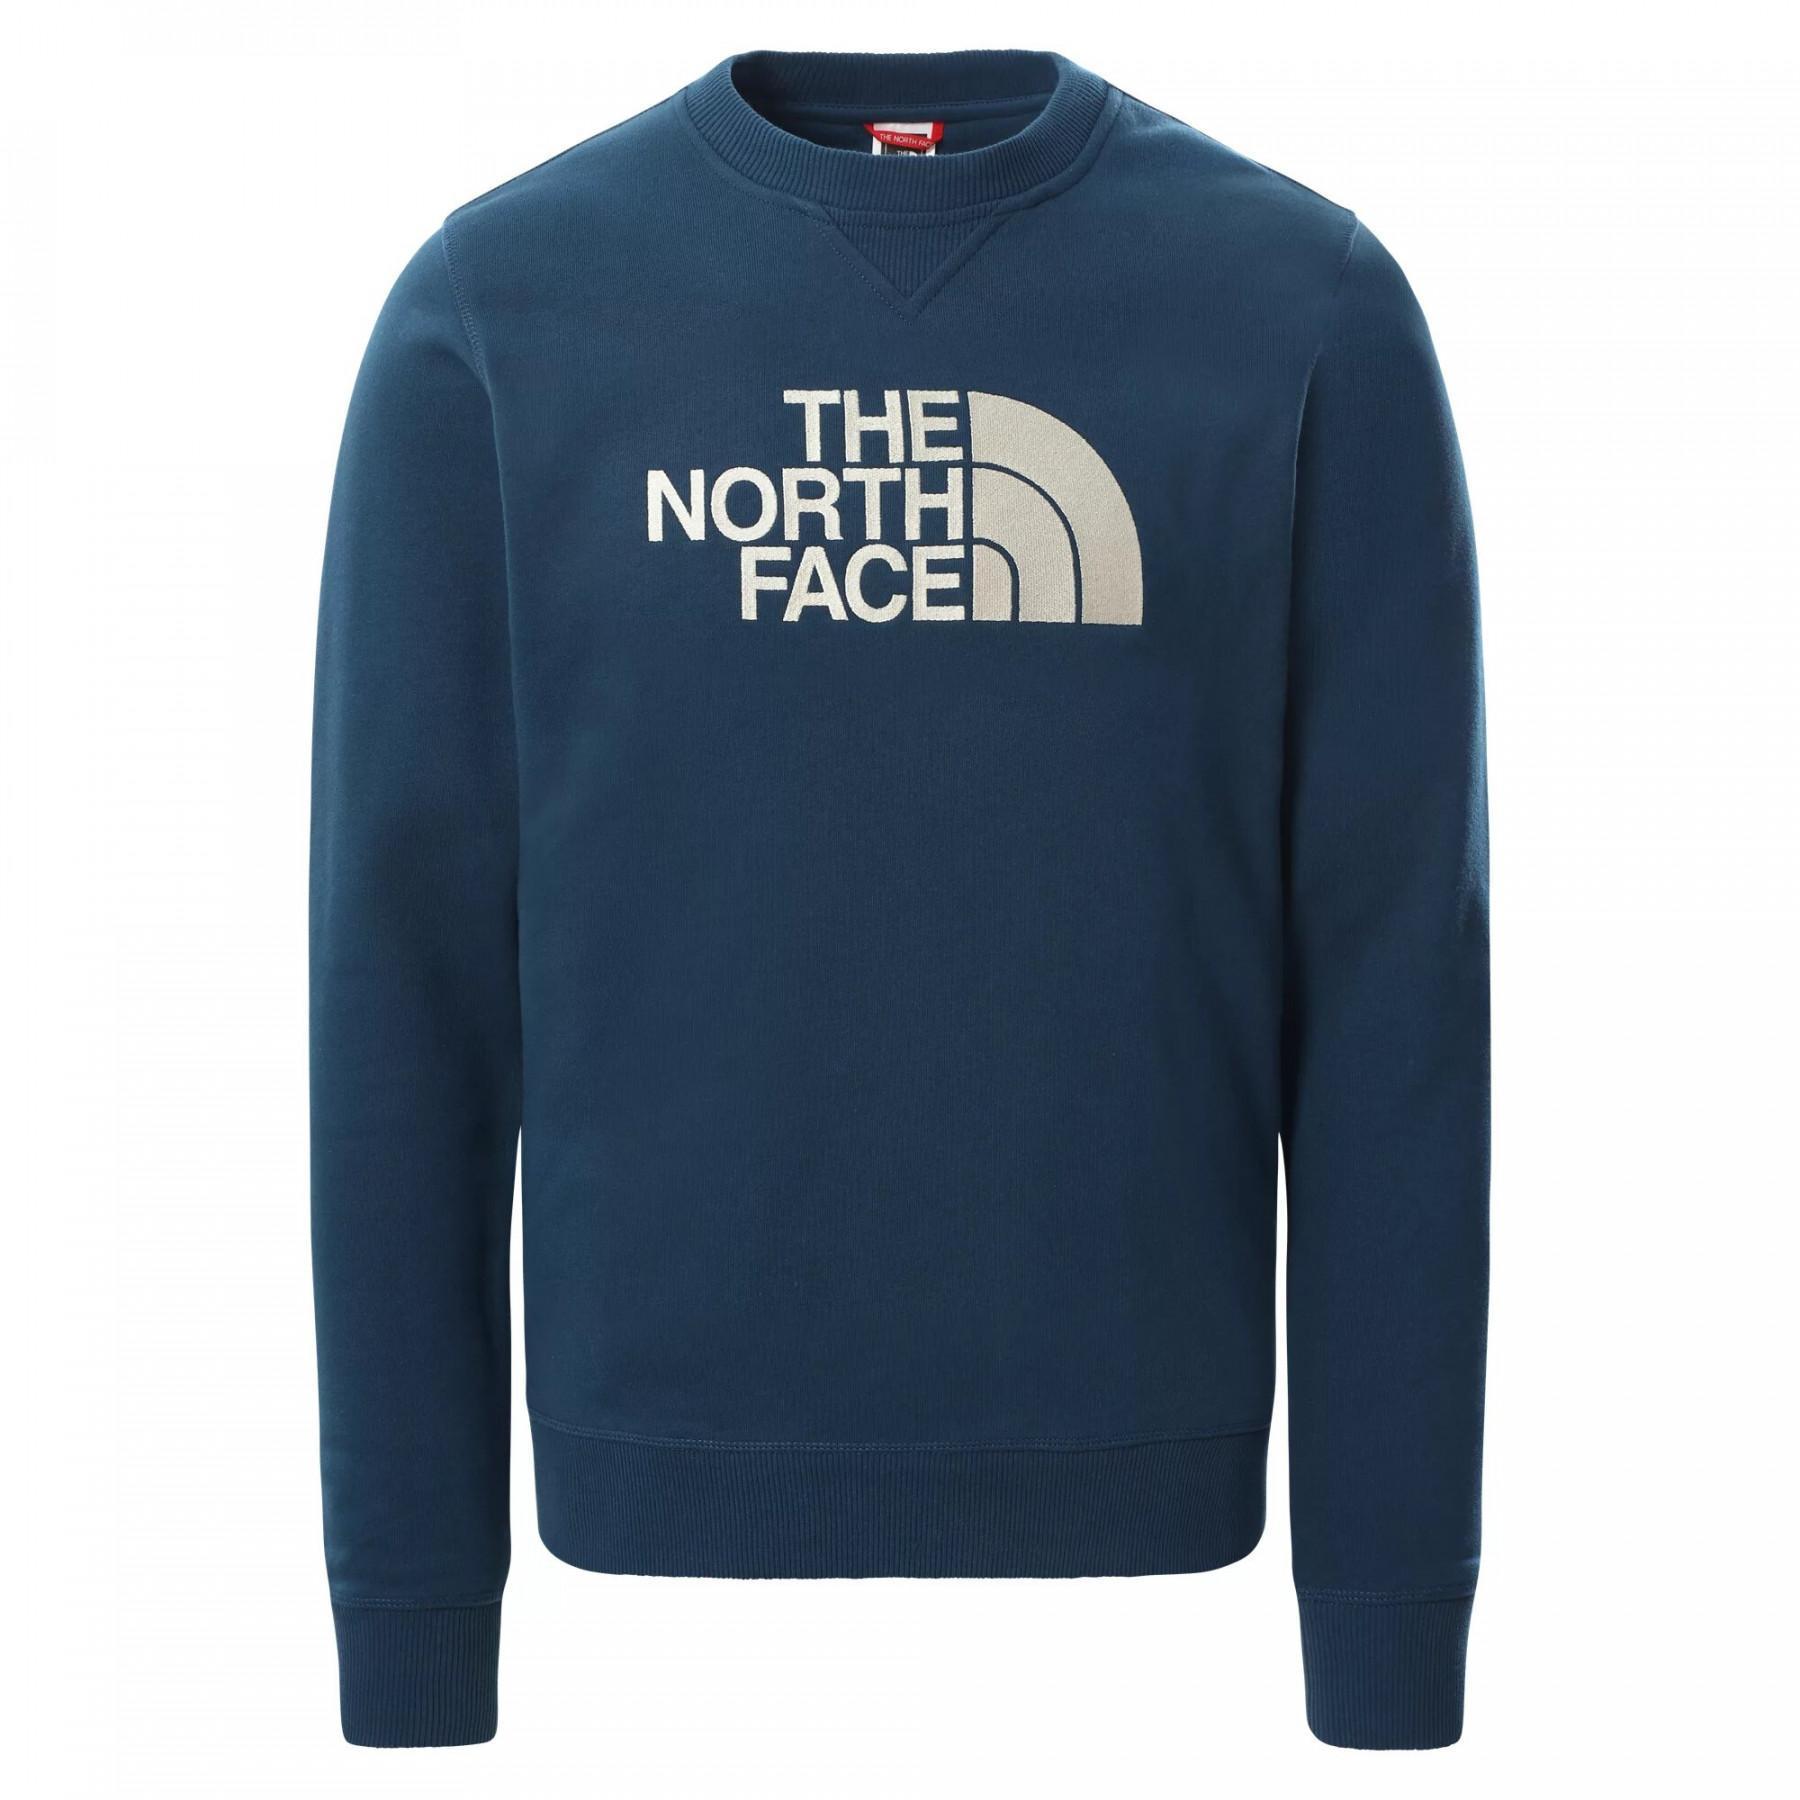 north face sweatshirt blue